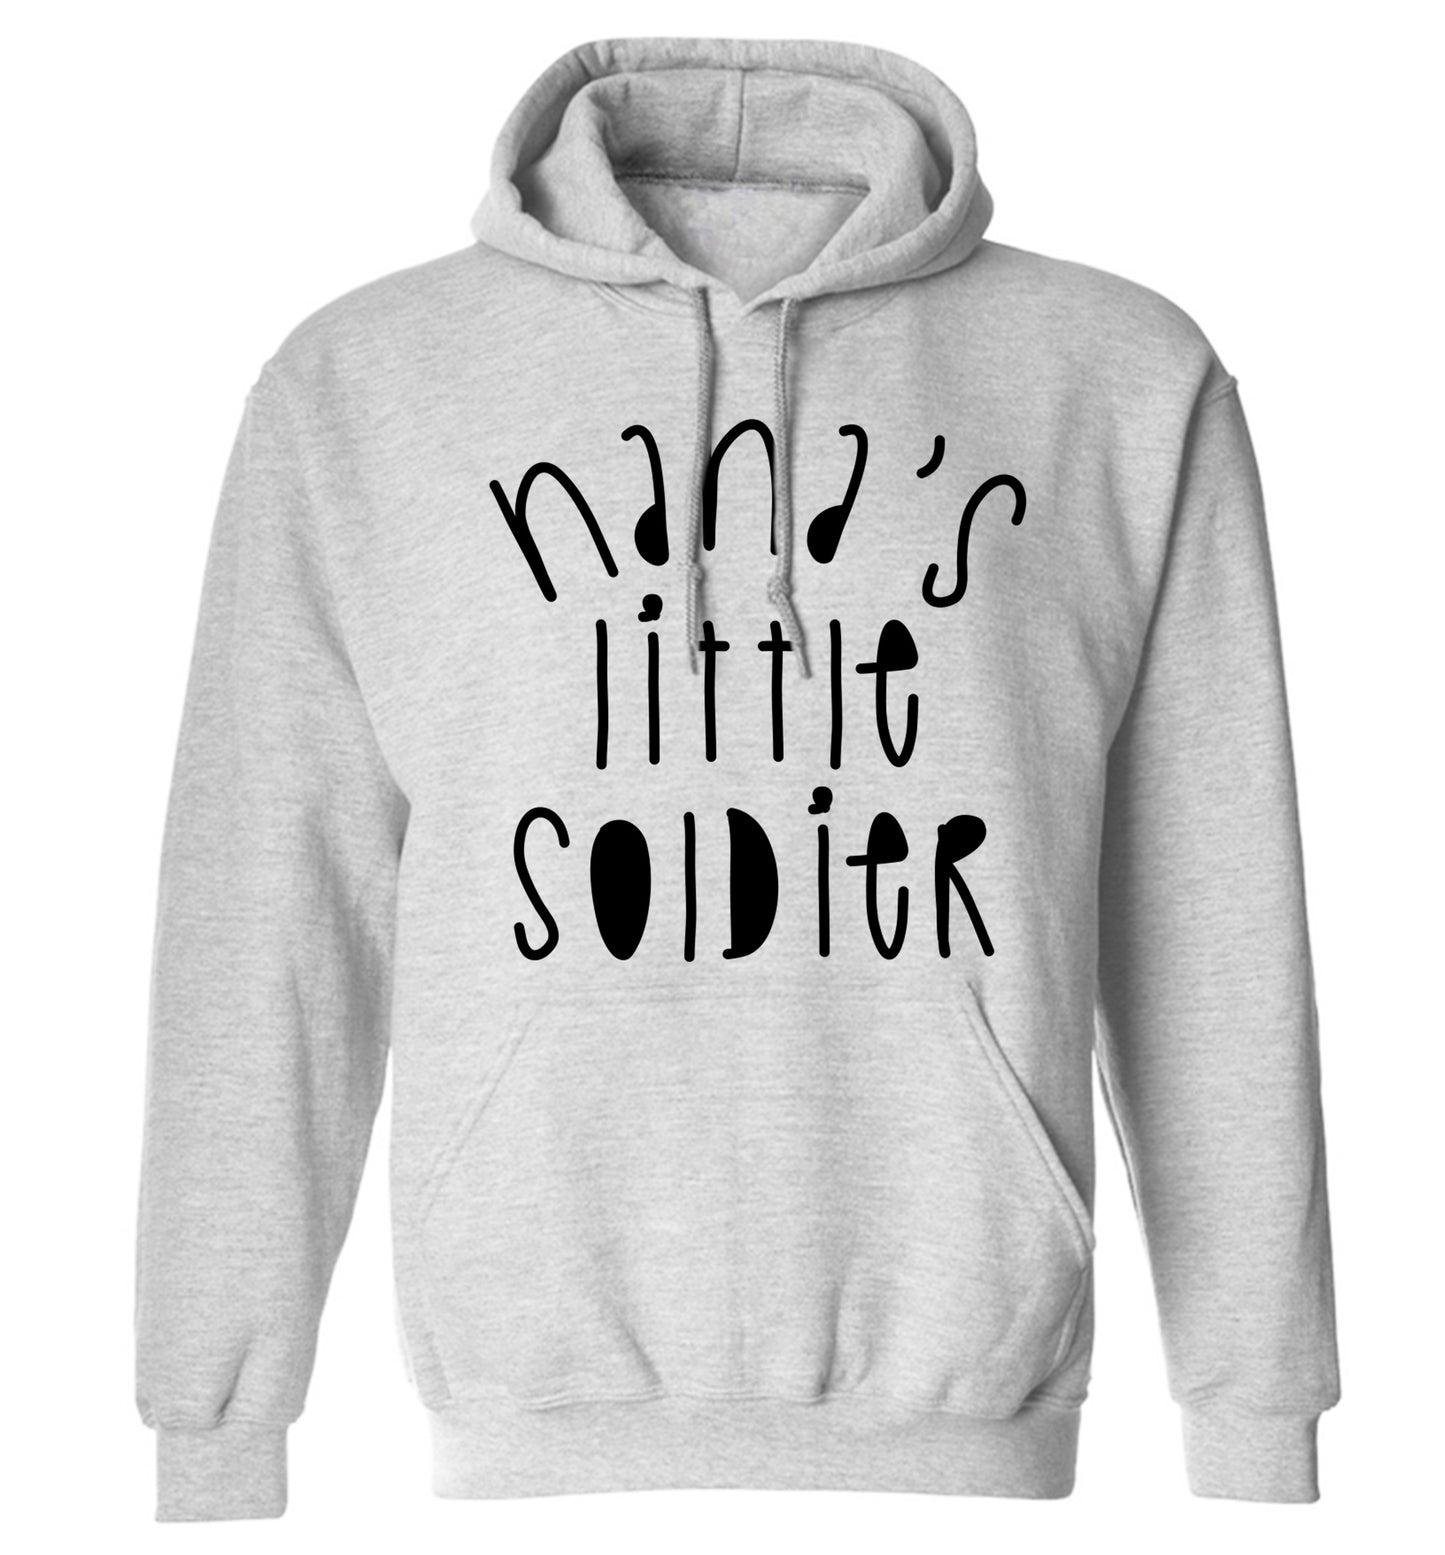 Nana's little soldier adults unisex grey hoodie 2XL